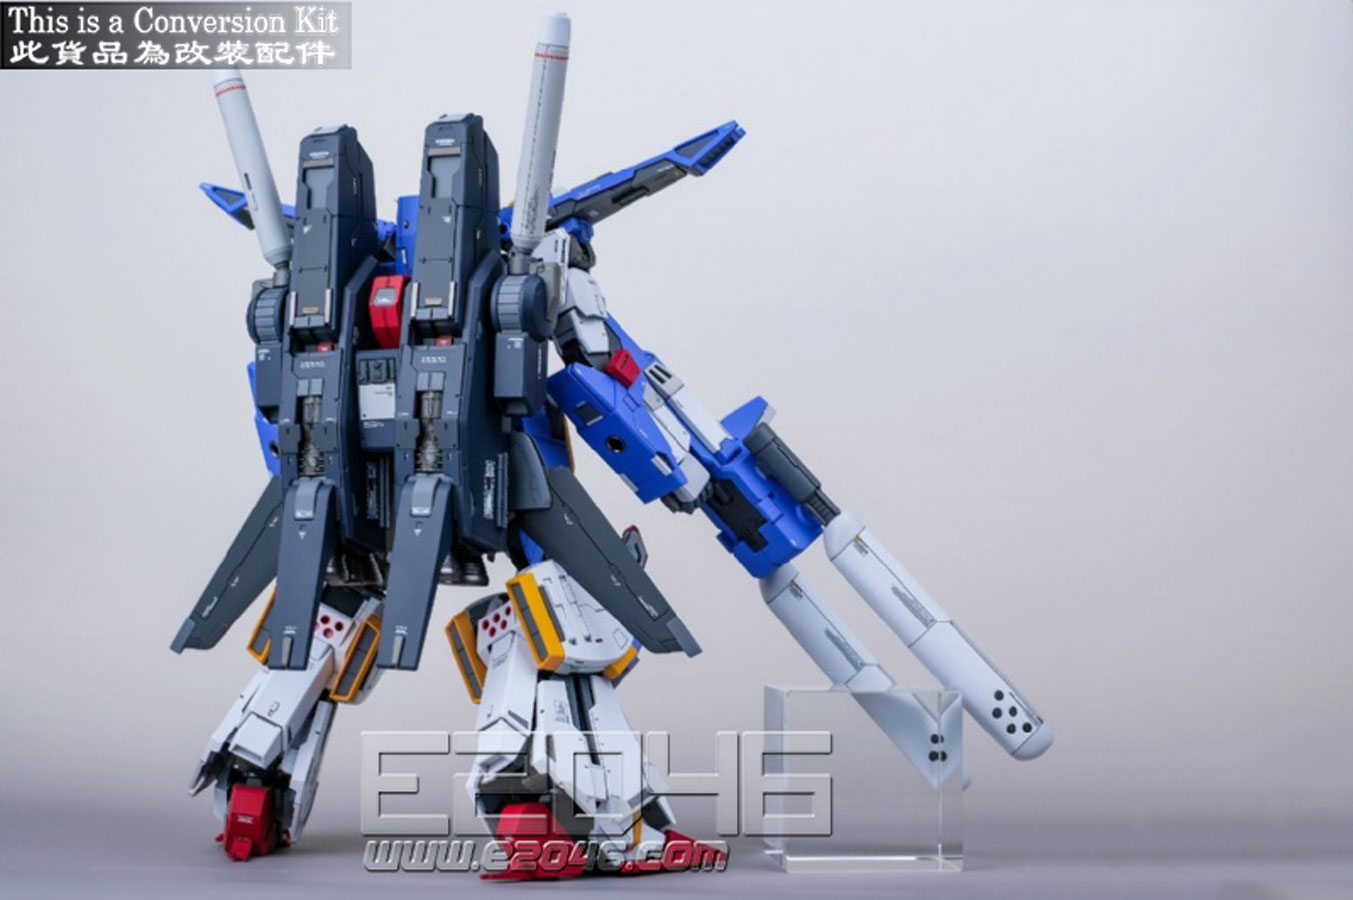 ZZ Gundam Conversion Kit